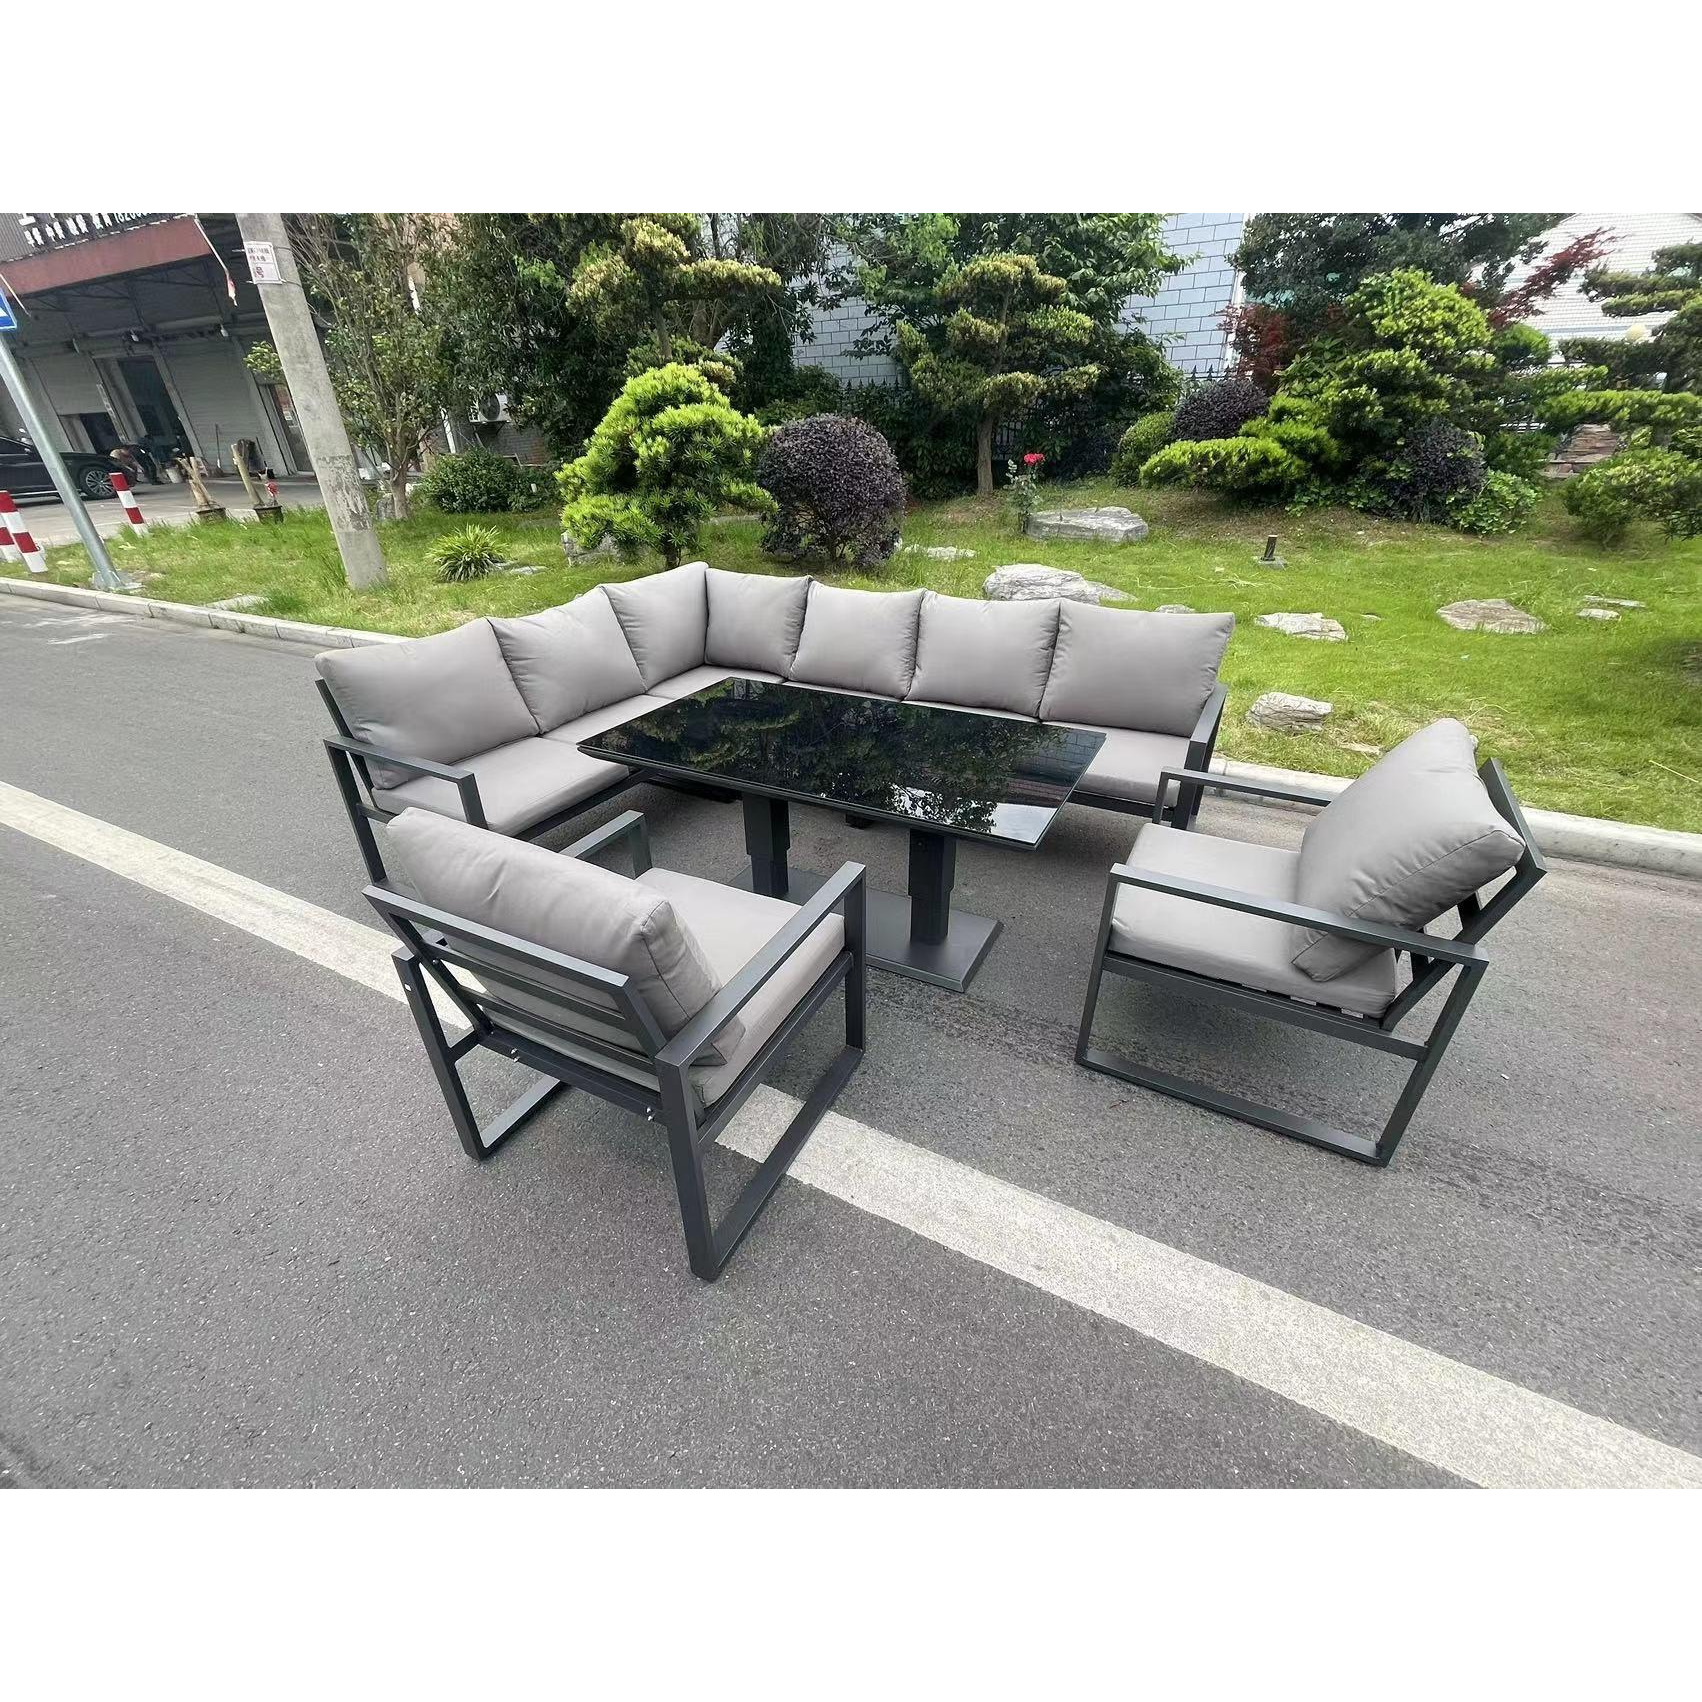 Aluminum Outdoor Garden Furniture Corner Sofa Chair Adjustable Rising Lifting Dining Table Sets Black Tempered Glass Dark Grey 8 Seater - image 1